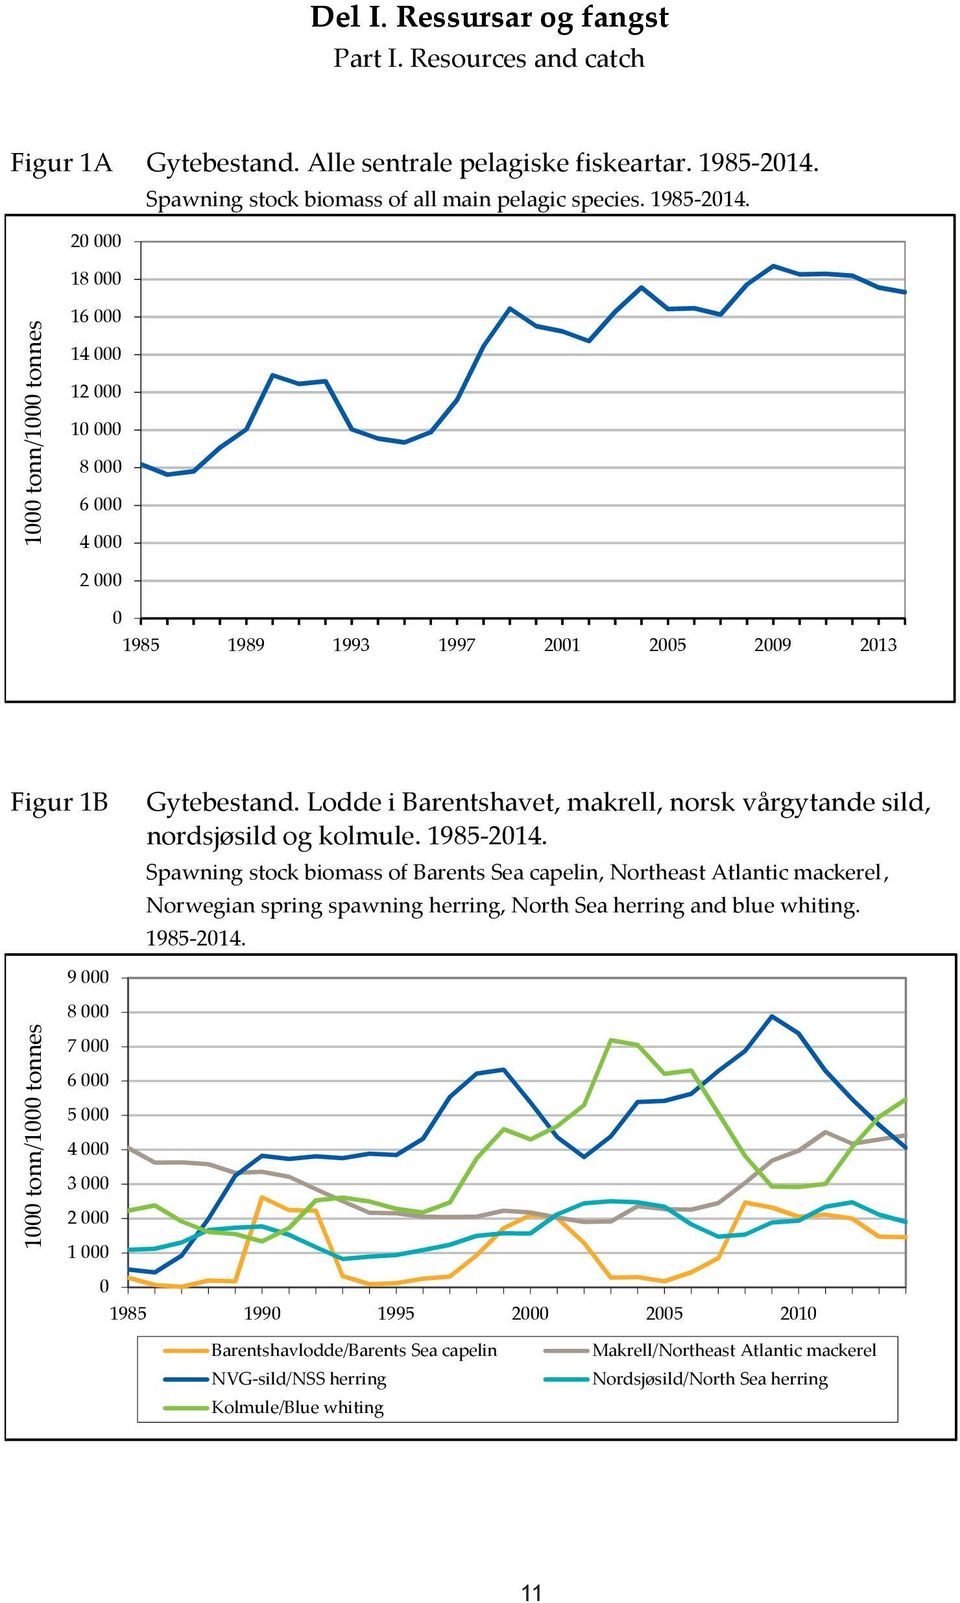 1985-214. Spawning stock biomass of Barents Sea capelin, Northeast Atlantic mackerel, Norwegian spring spawning herring, North Sea herring and blue whiting. 1985-214.